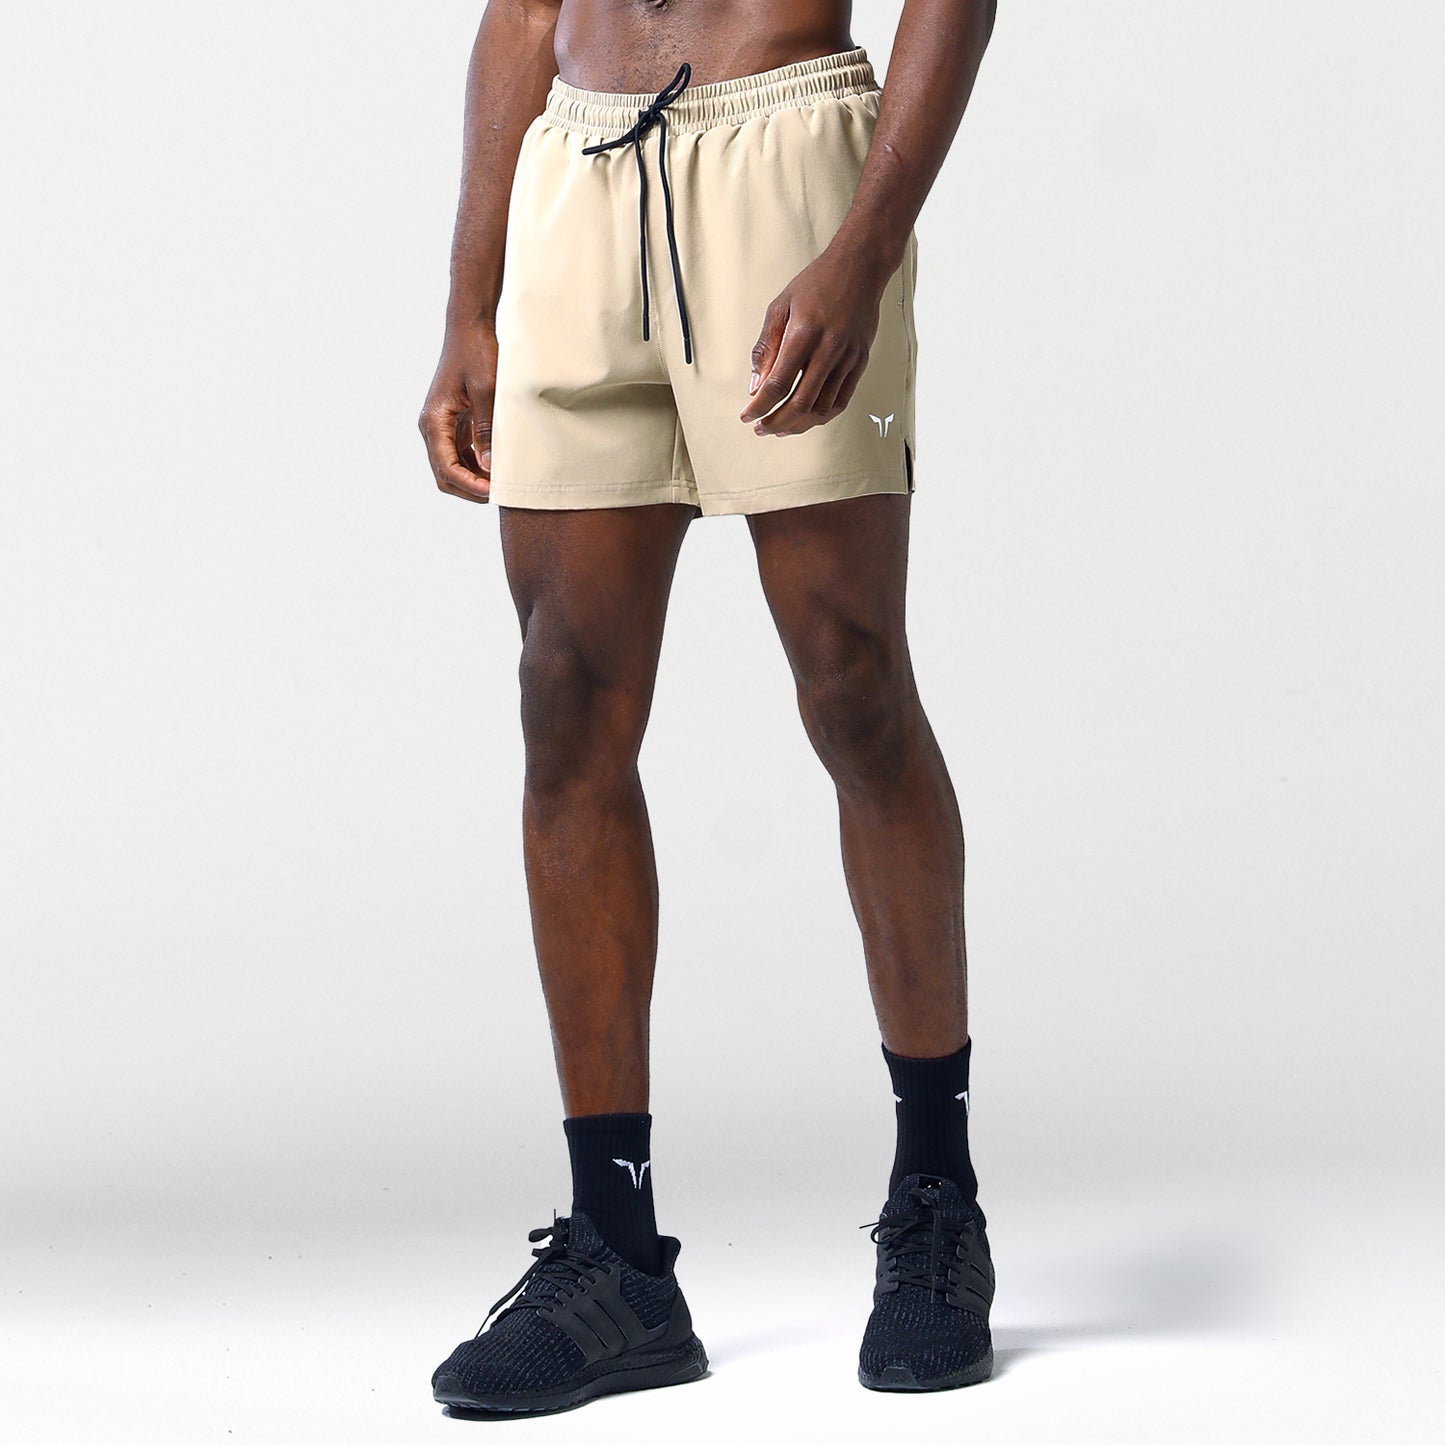 squatwolf-gym-wear-essential-gym-5-inch-shorts-sand-workout-short-for-men